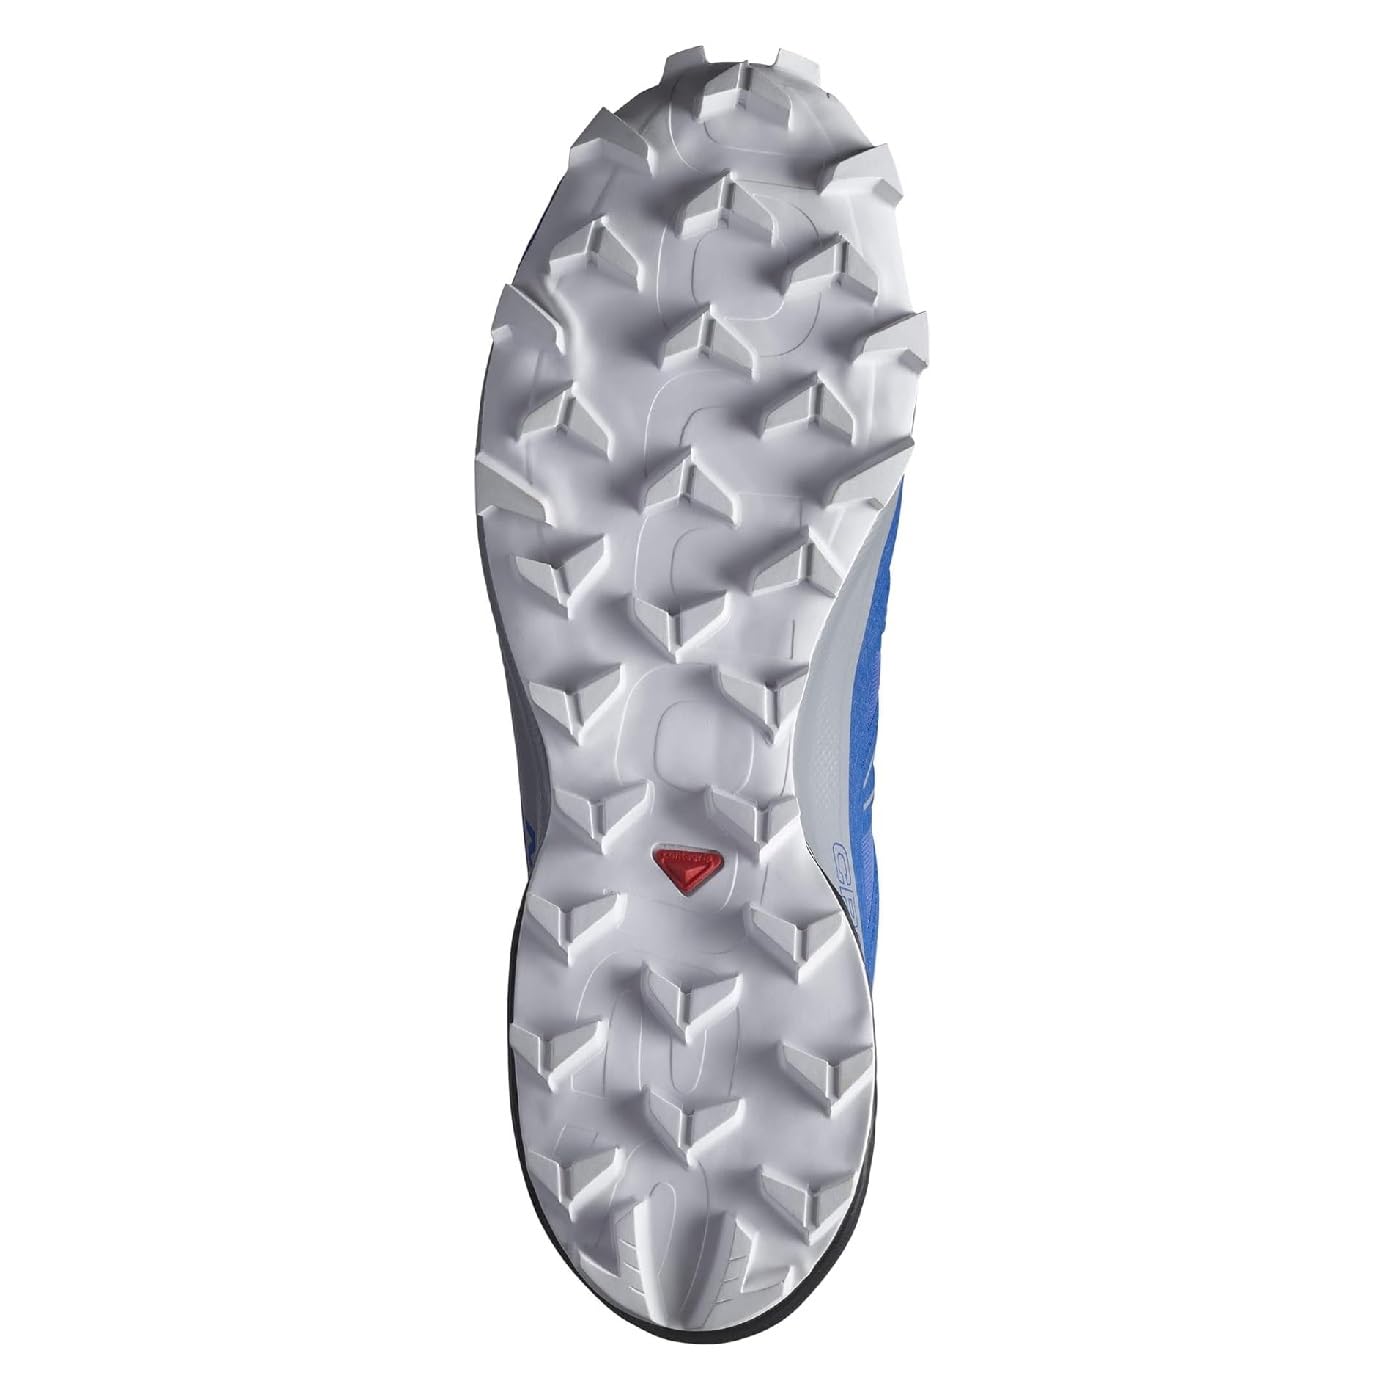 Salomon Men's Speedcross Hiking Shoe